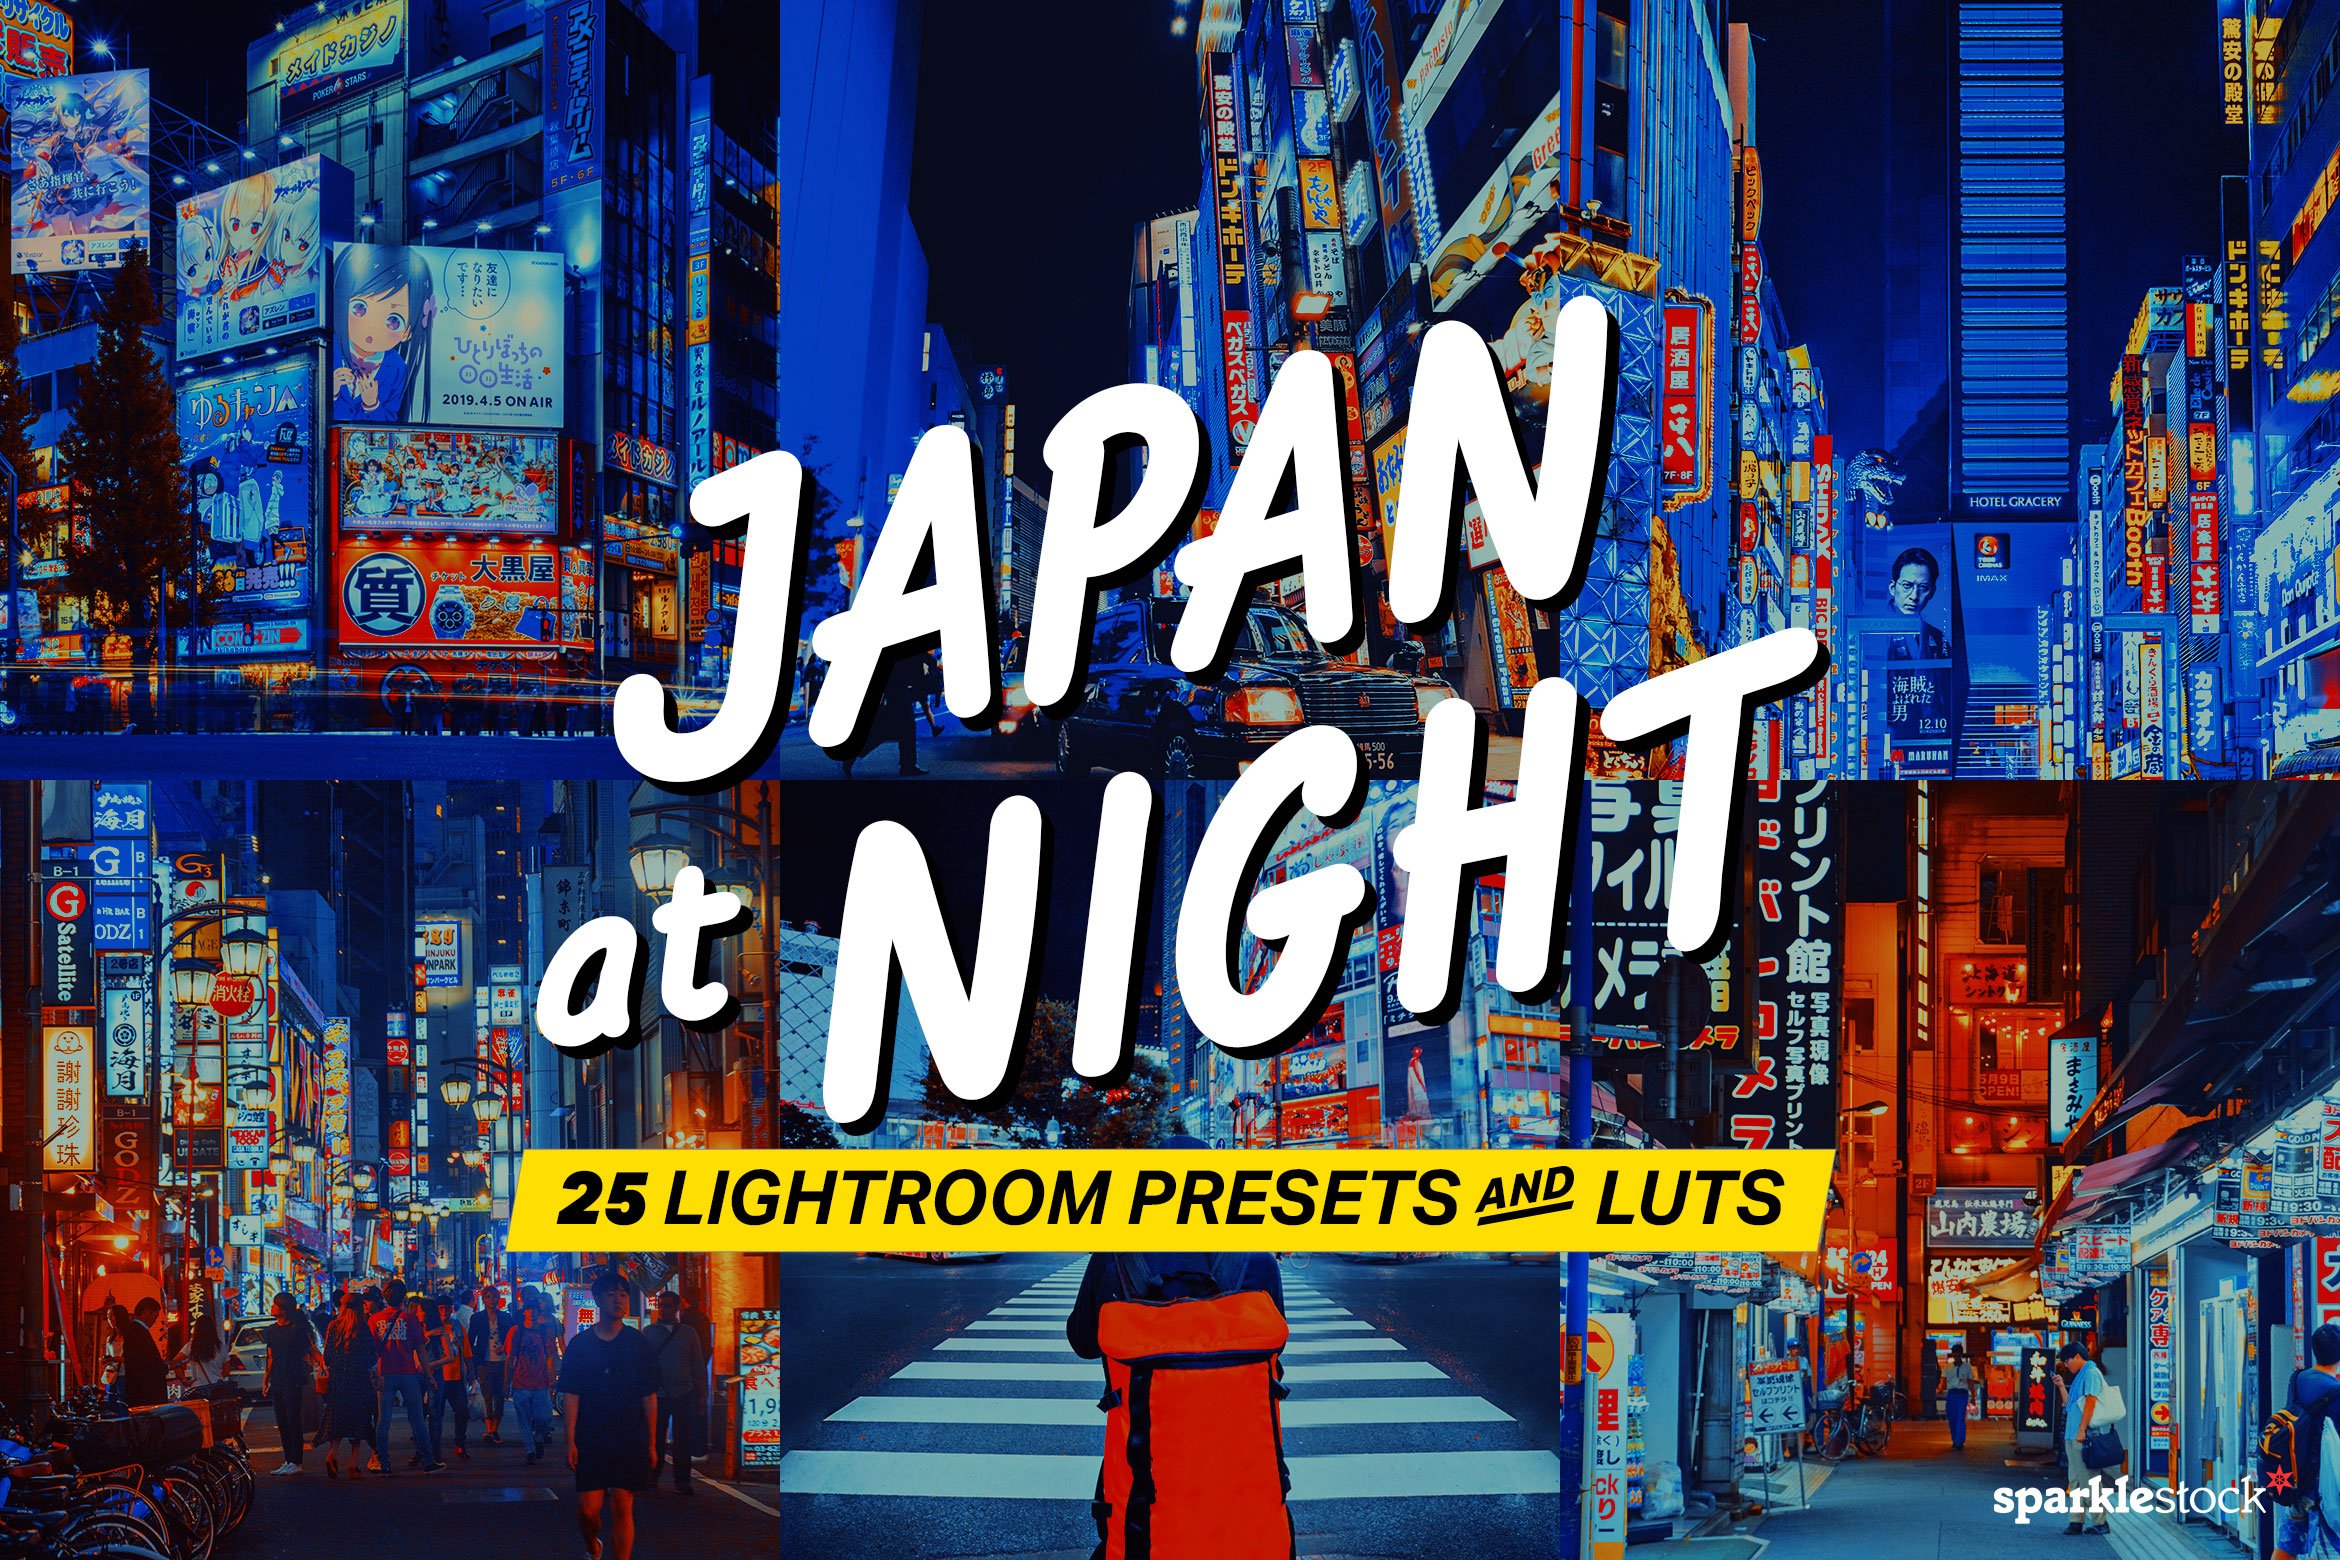 25 Japan at Night Lightroom Presetscover image.